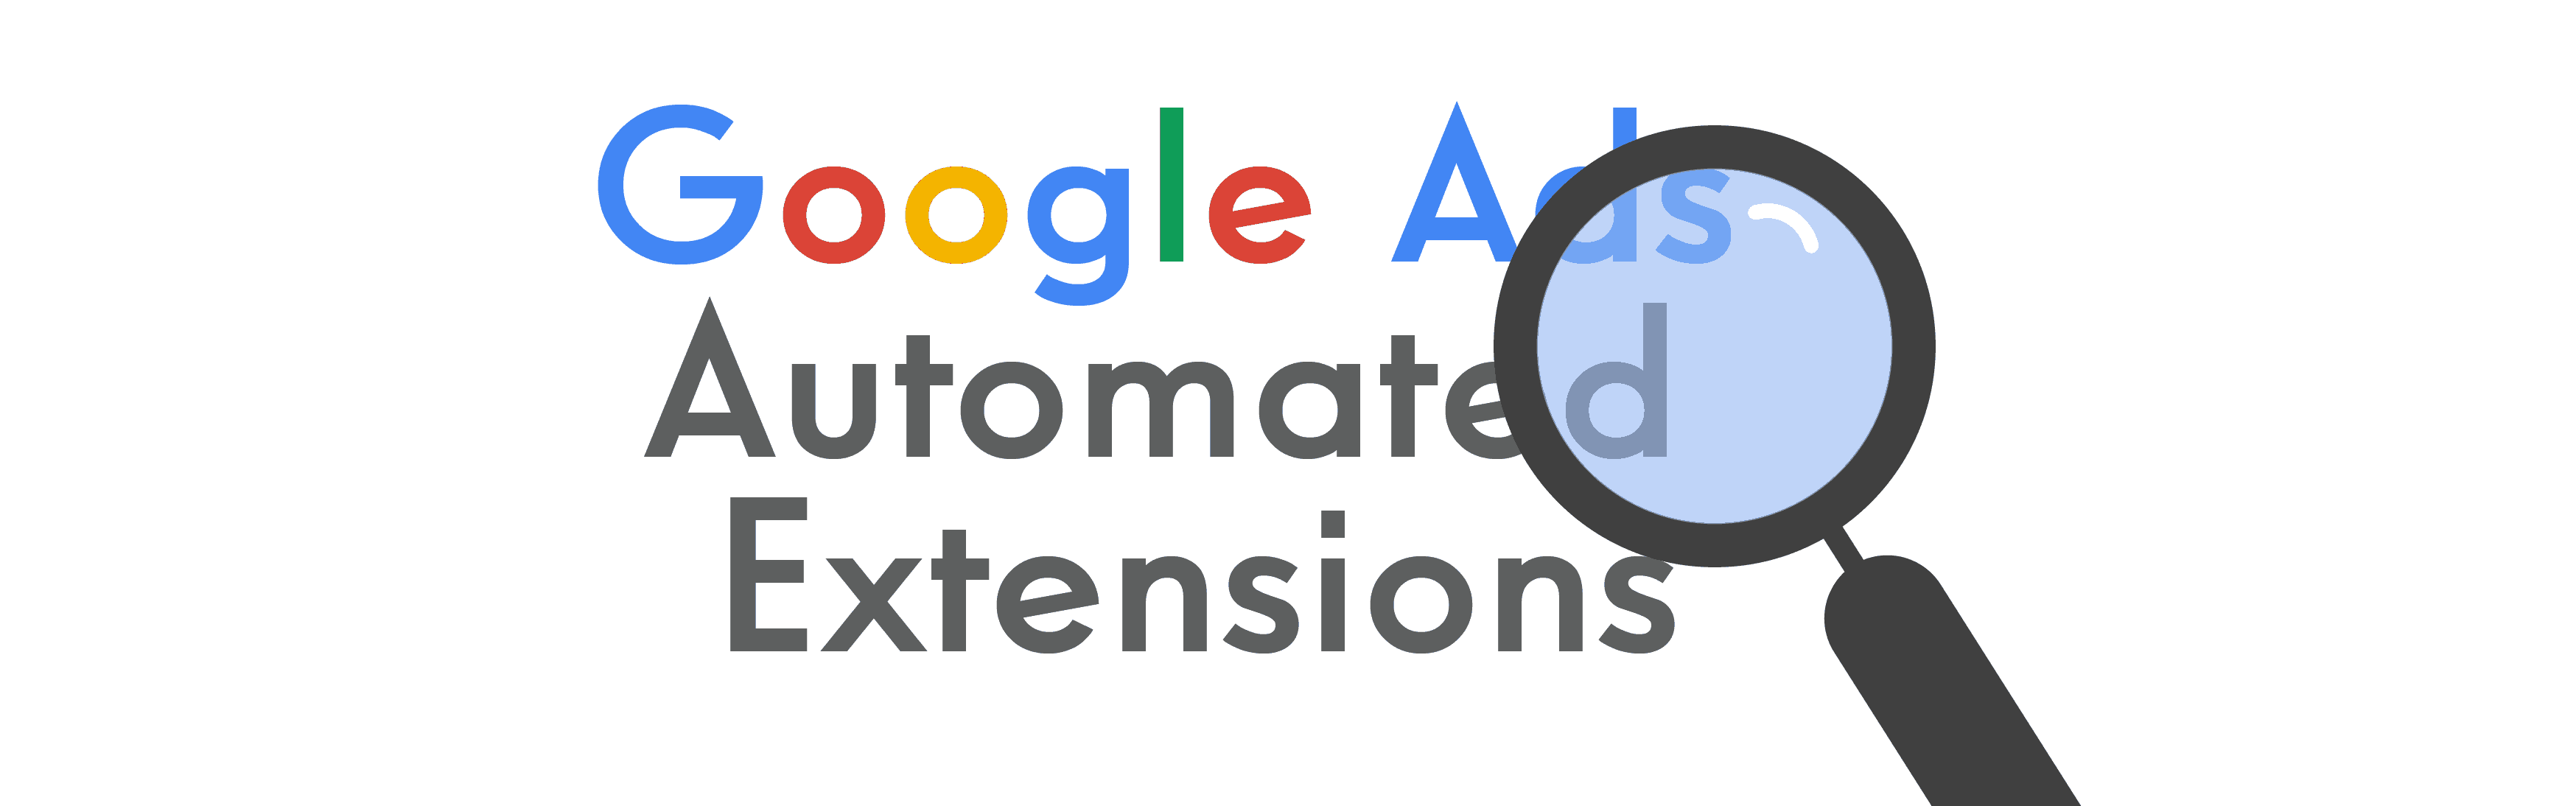 Ad extensions. Automated ads. Google ads со скидкой 2%.